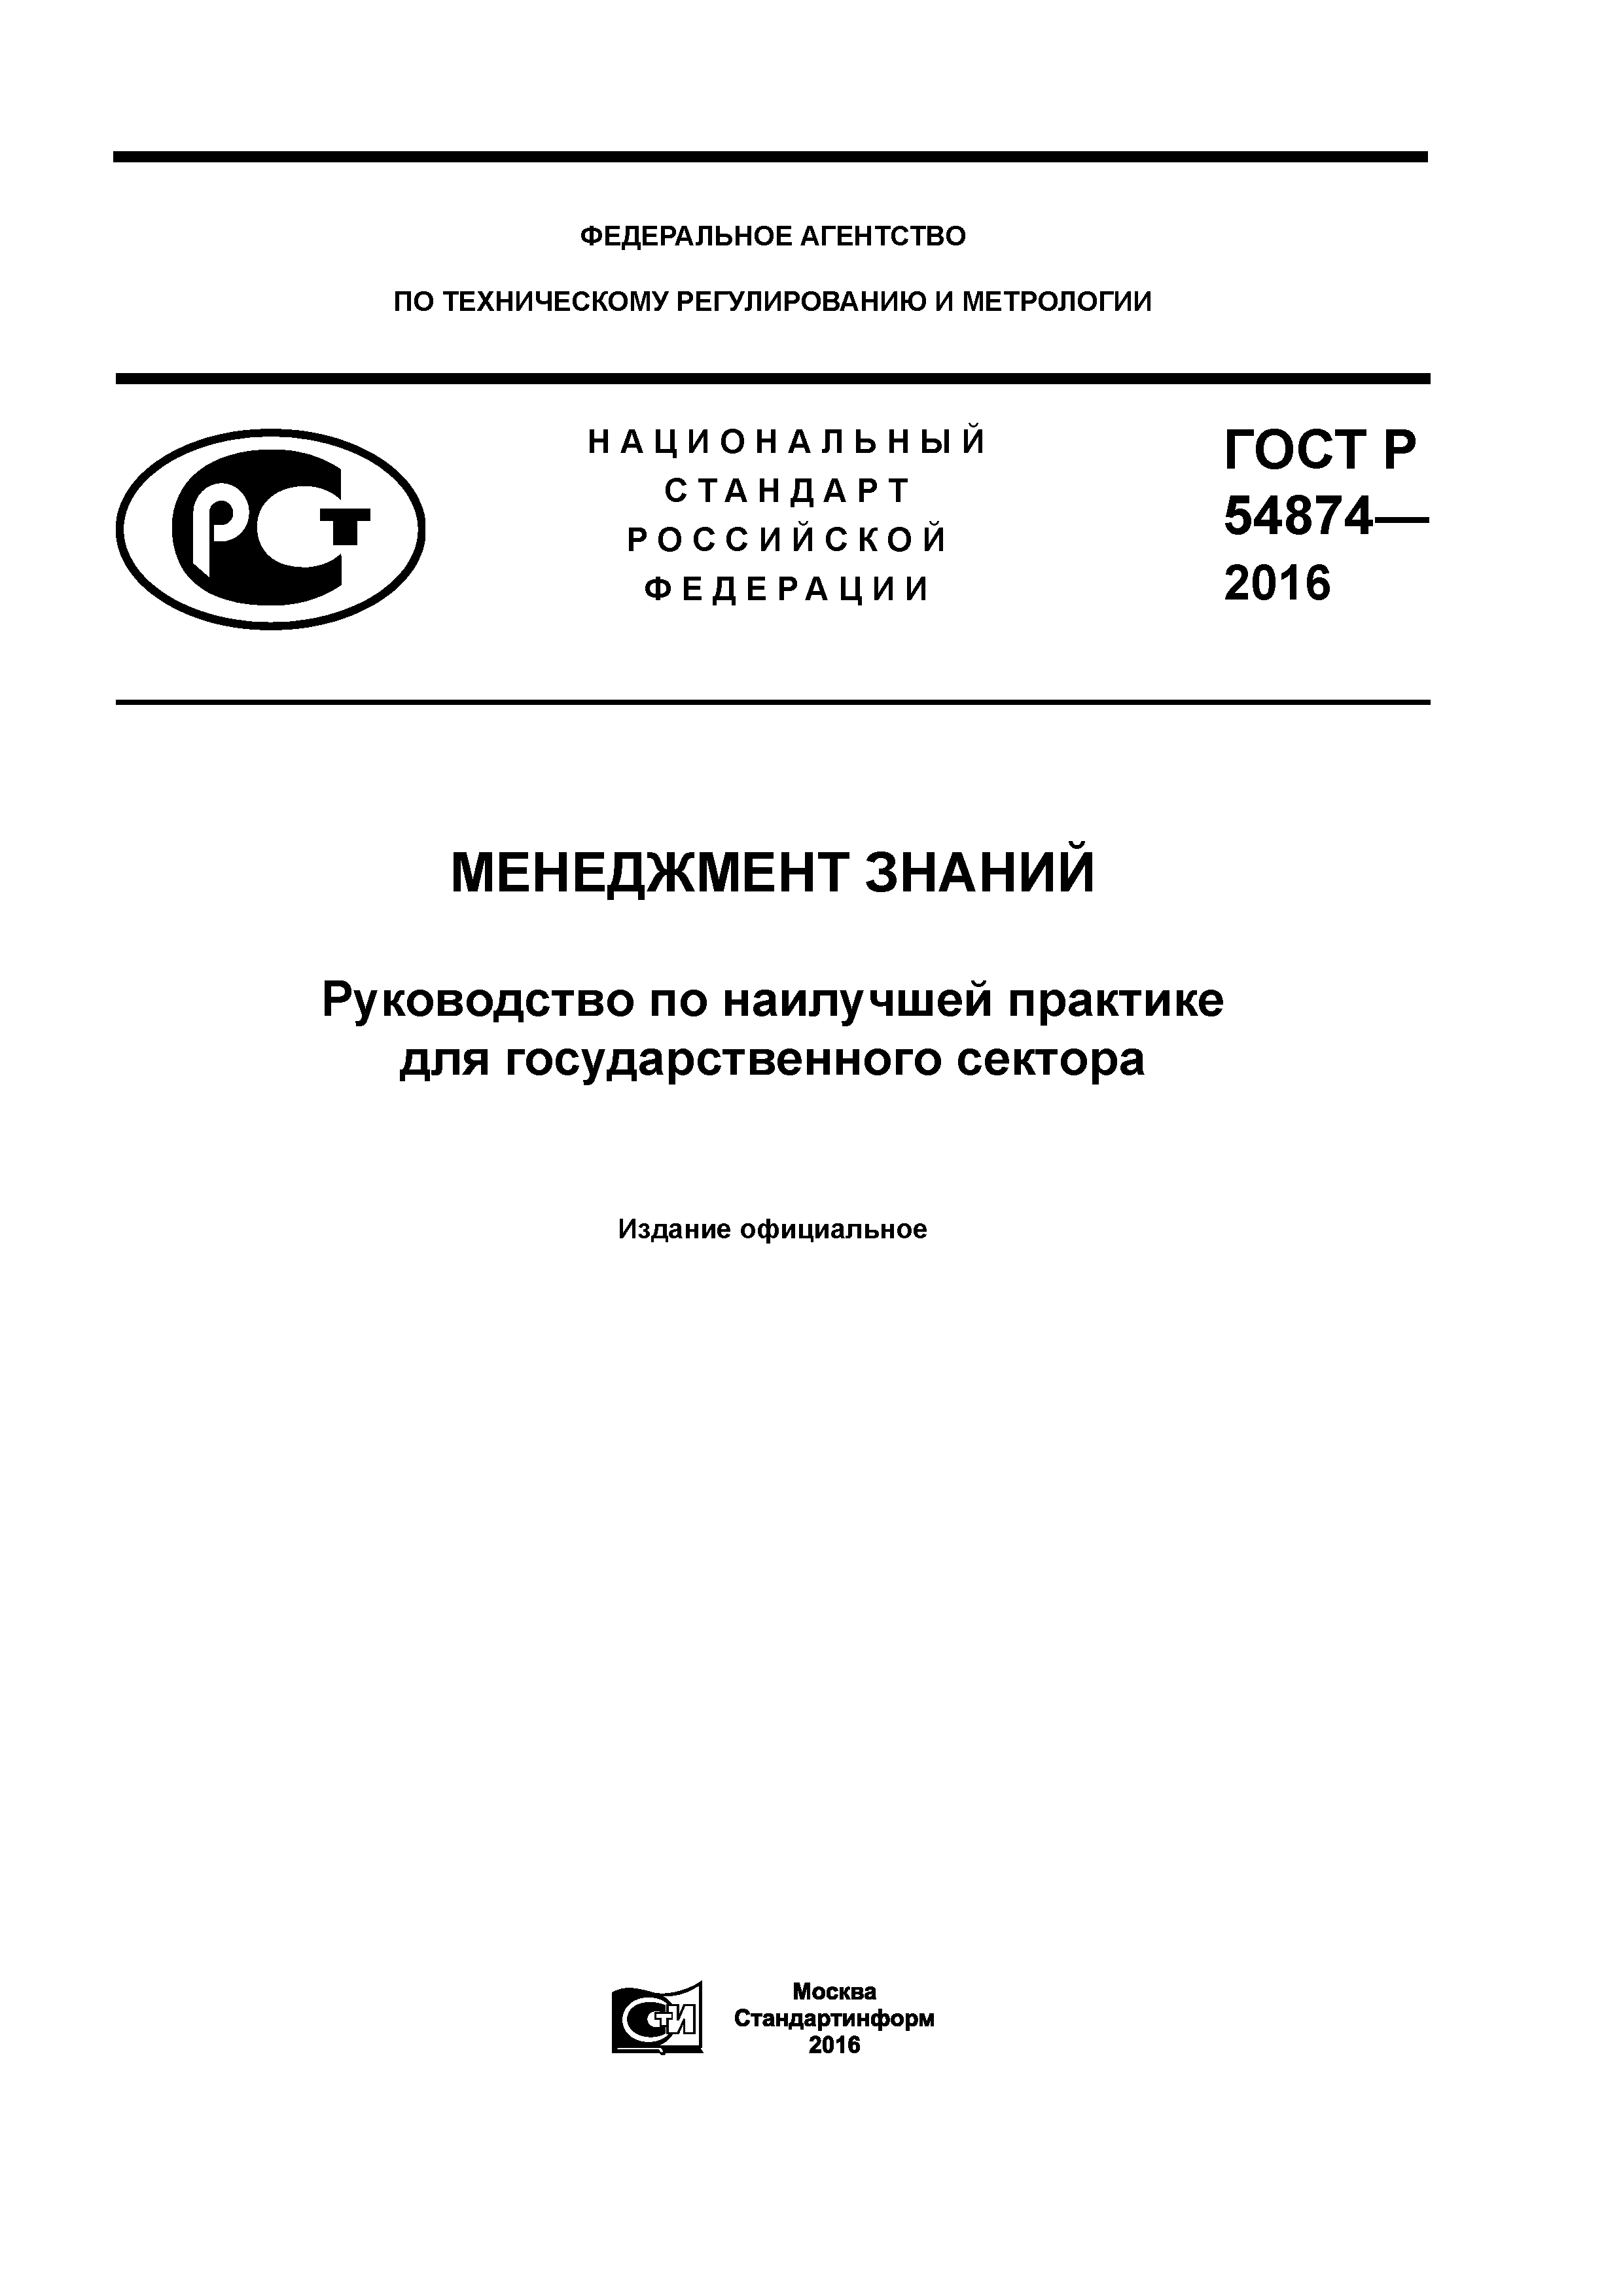 ГОСТ Р 54874-2016